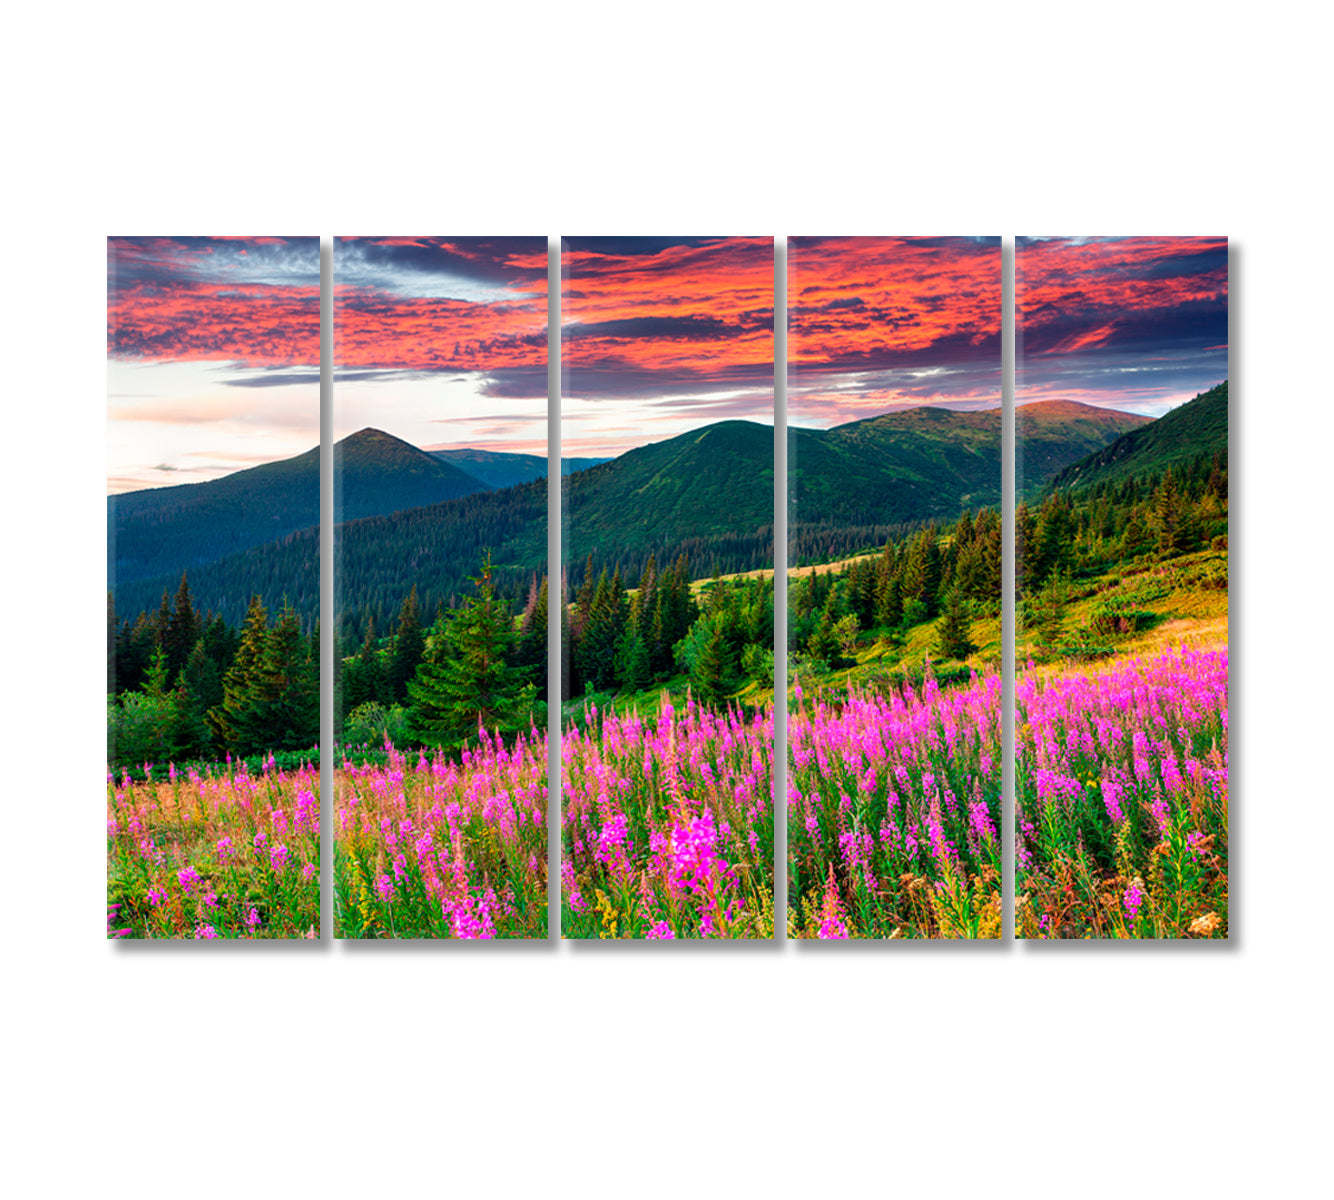 Flower Field near Mountains Canvas Print-Canvas Print-CetArt-5 Panels-36x24 inches-CetArt